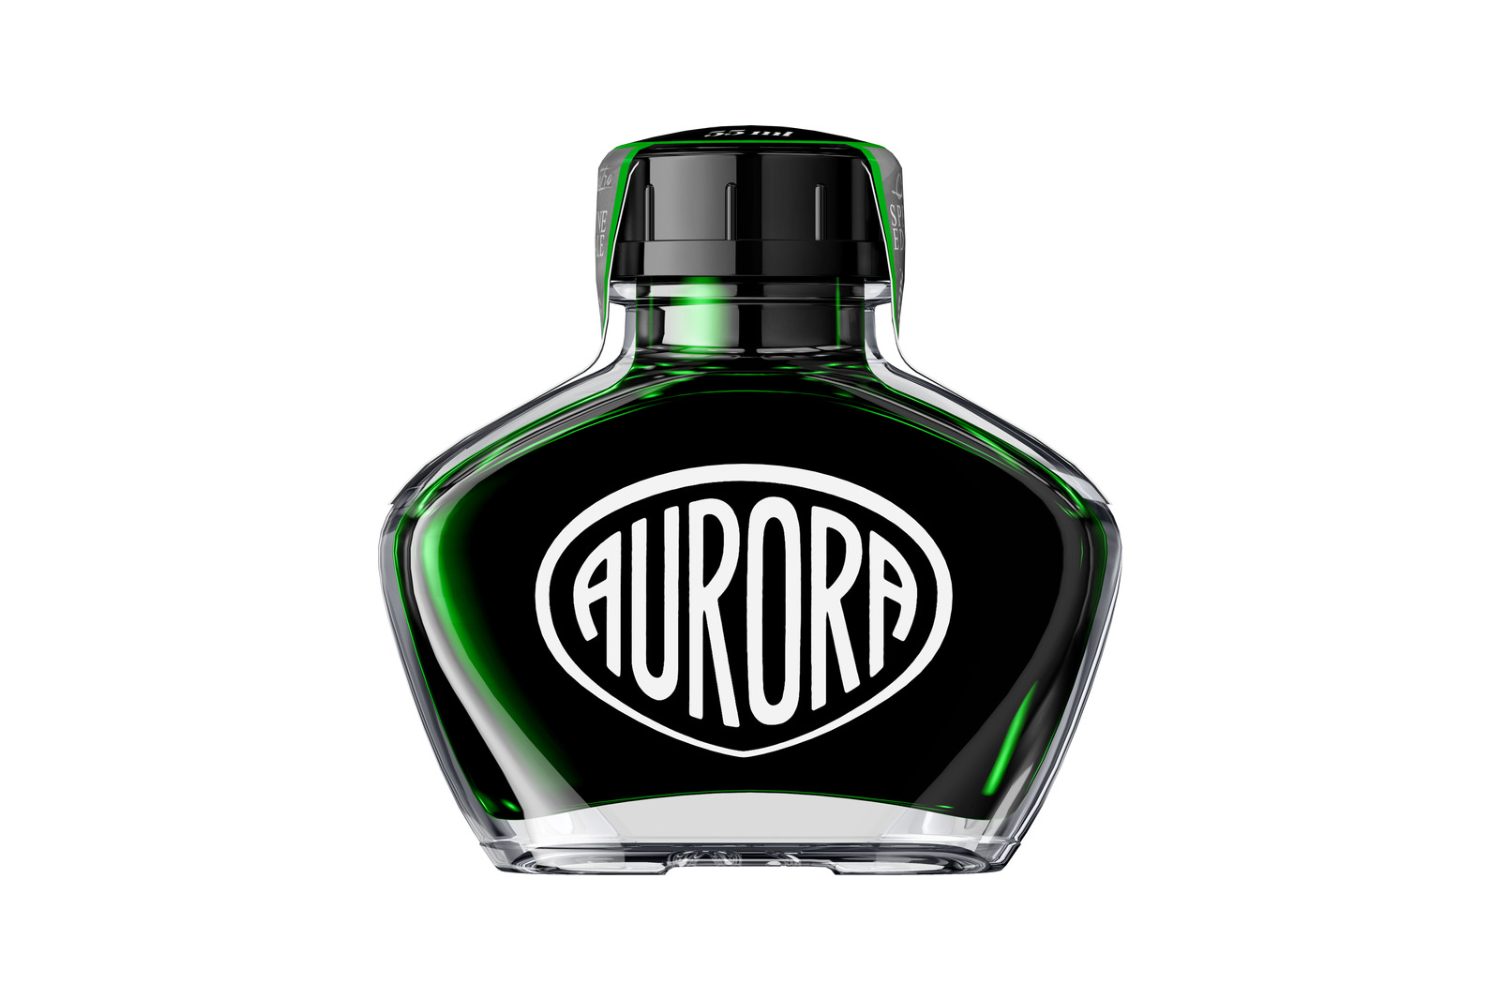 Aurora - 100th Anniversary Ink - Green 55ml